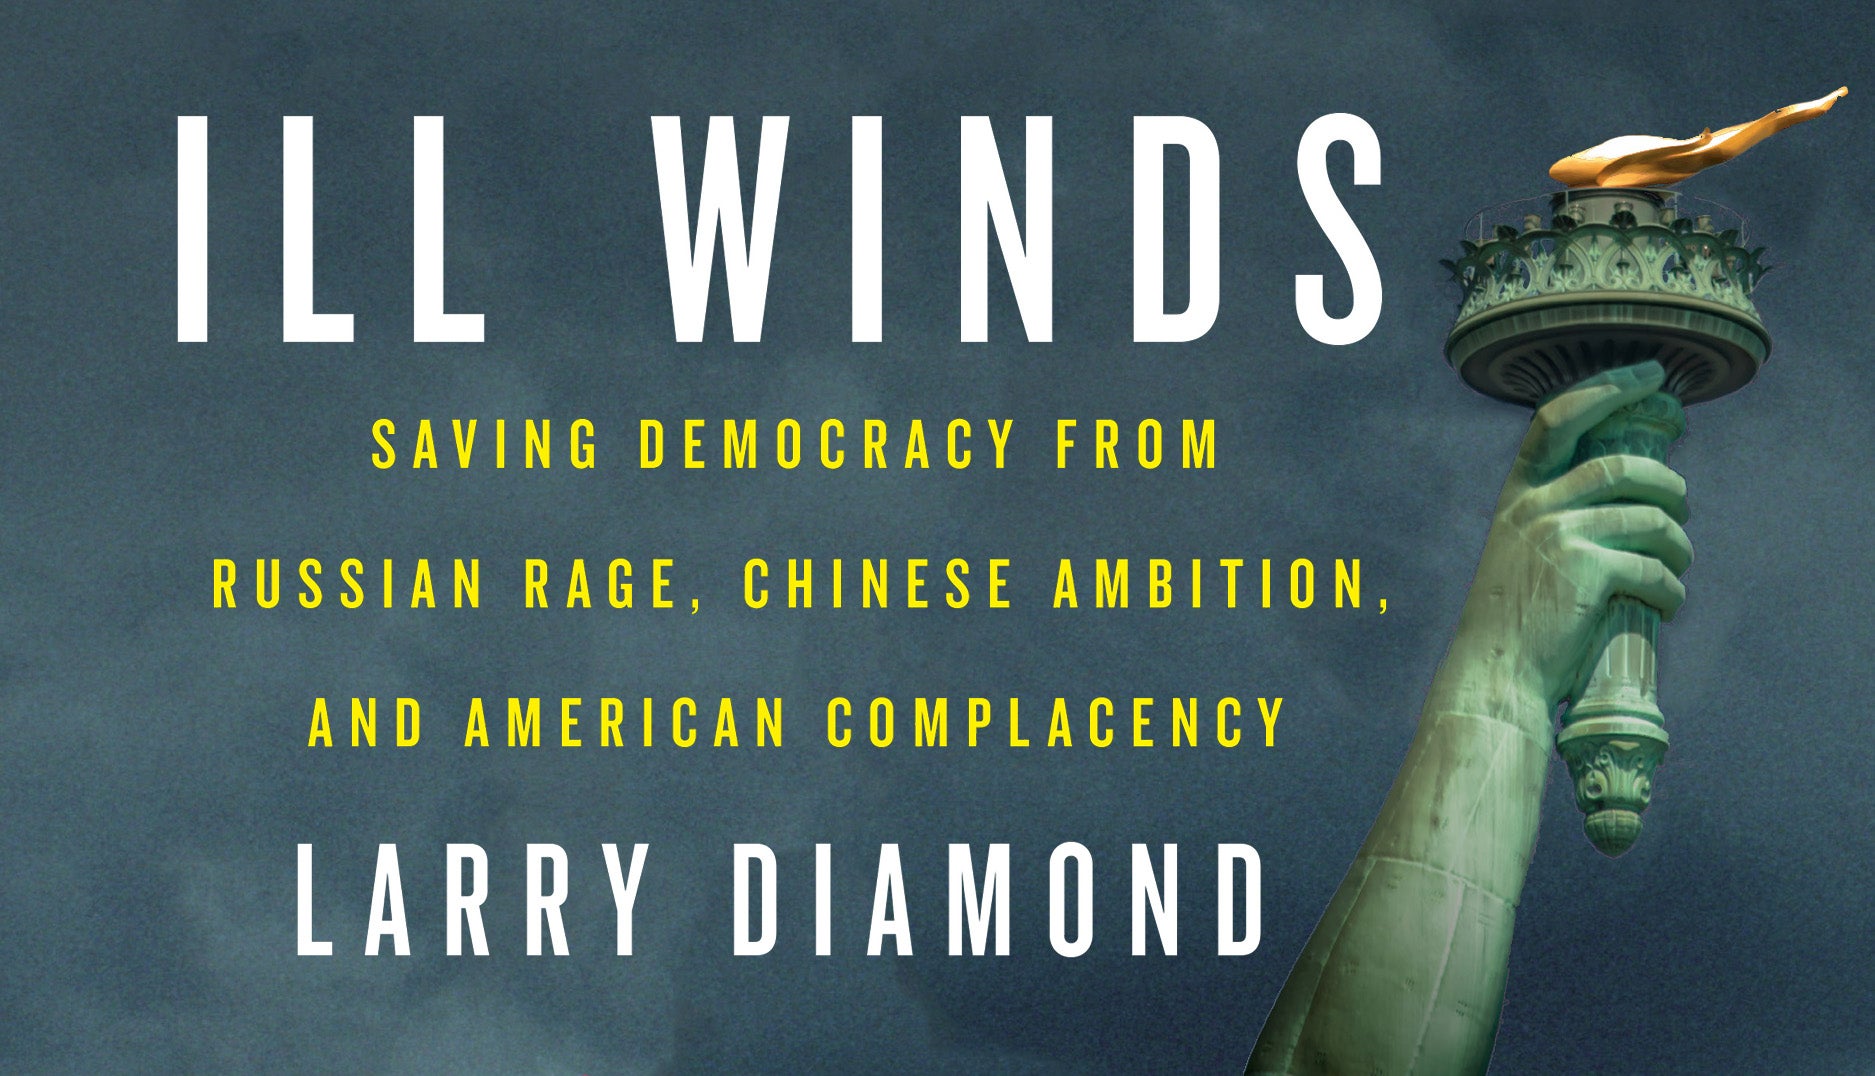 Larry Diamond Warns of <i>Ill Winds</i>